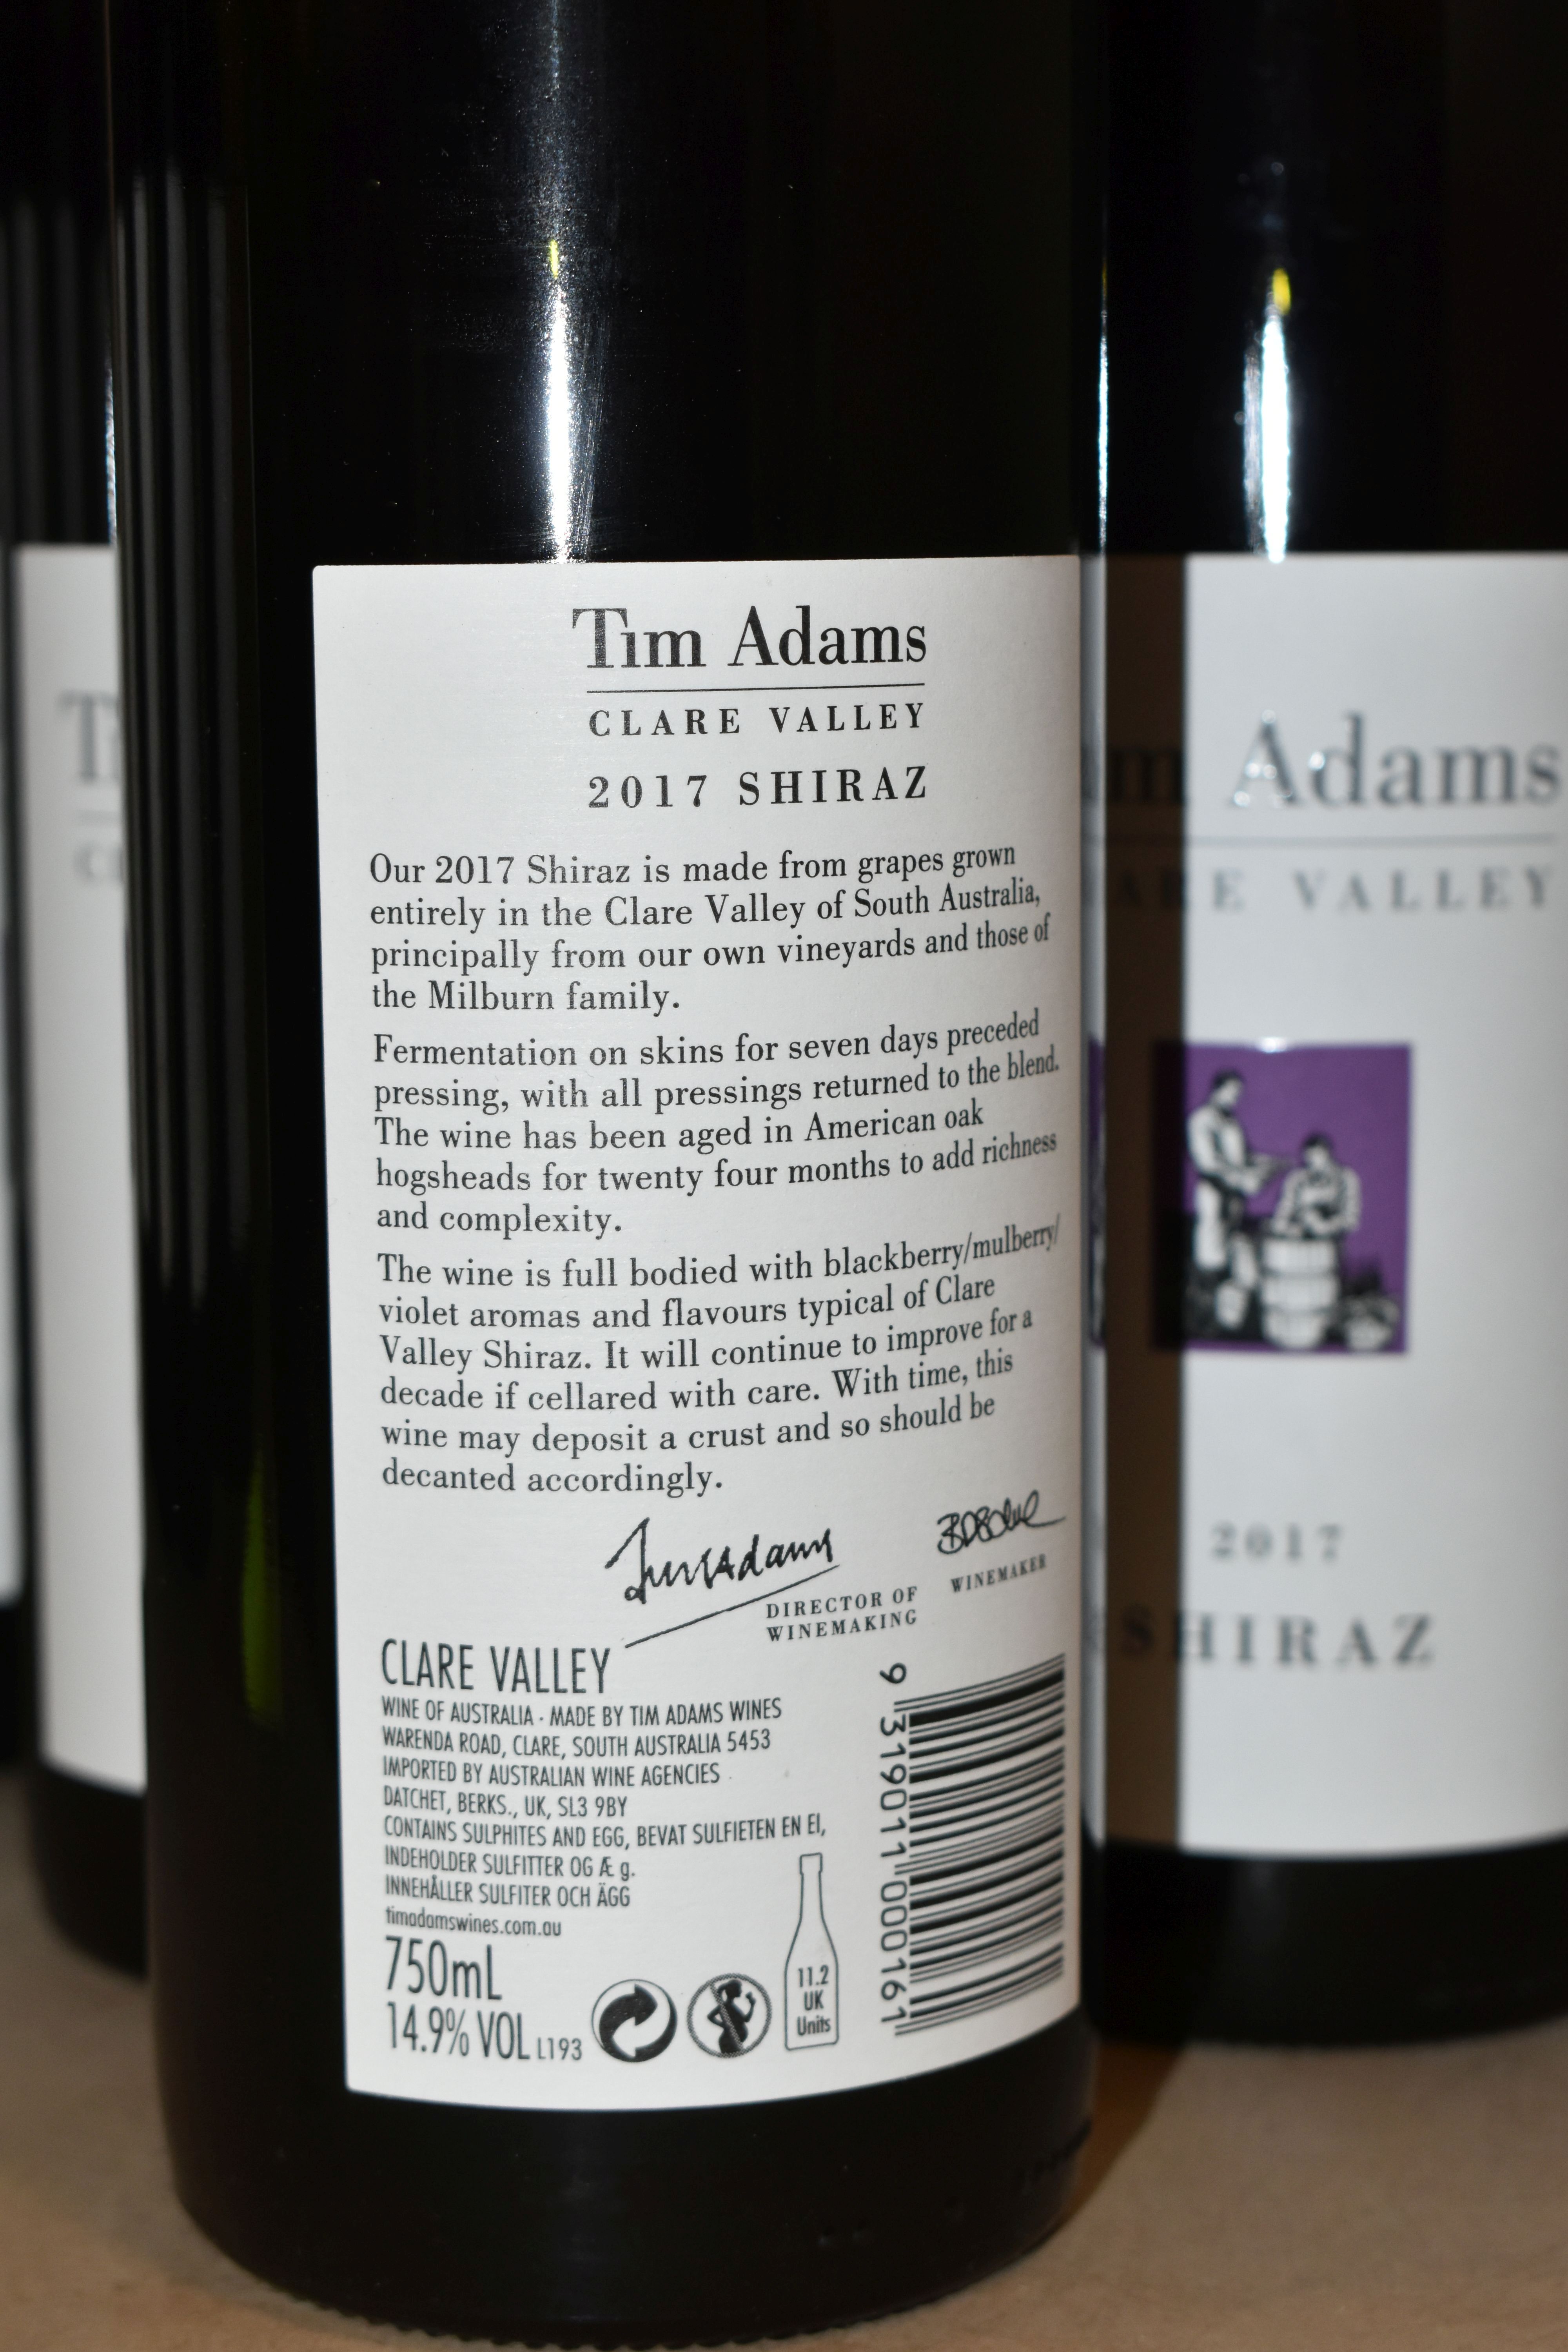 WINE, Twelve Bottles of TIM ADAMS CLARE VALLEY SHIRAZ 2017 (Aus) 14.9% vol. 750ml, all seals intact - Image 2 of 3